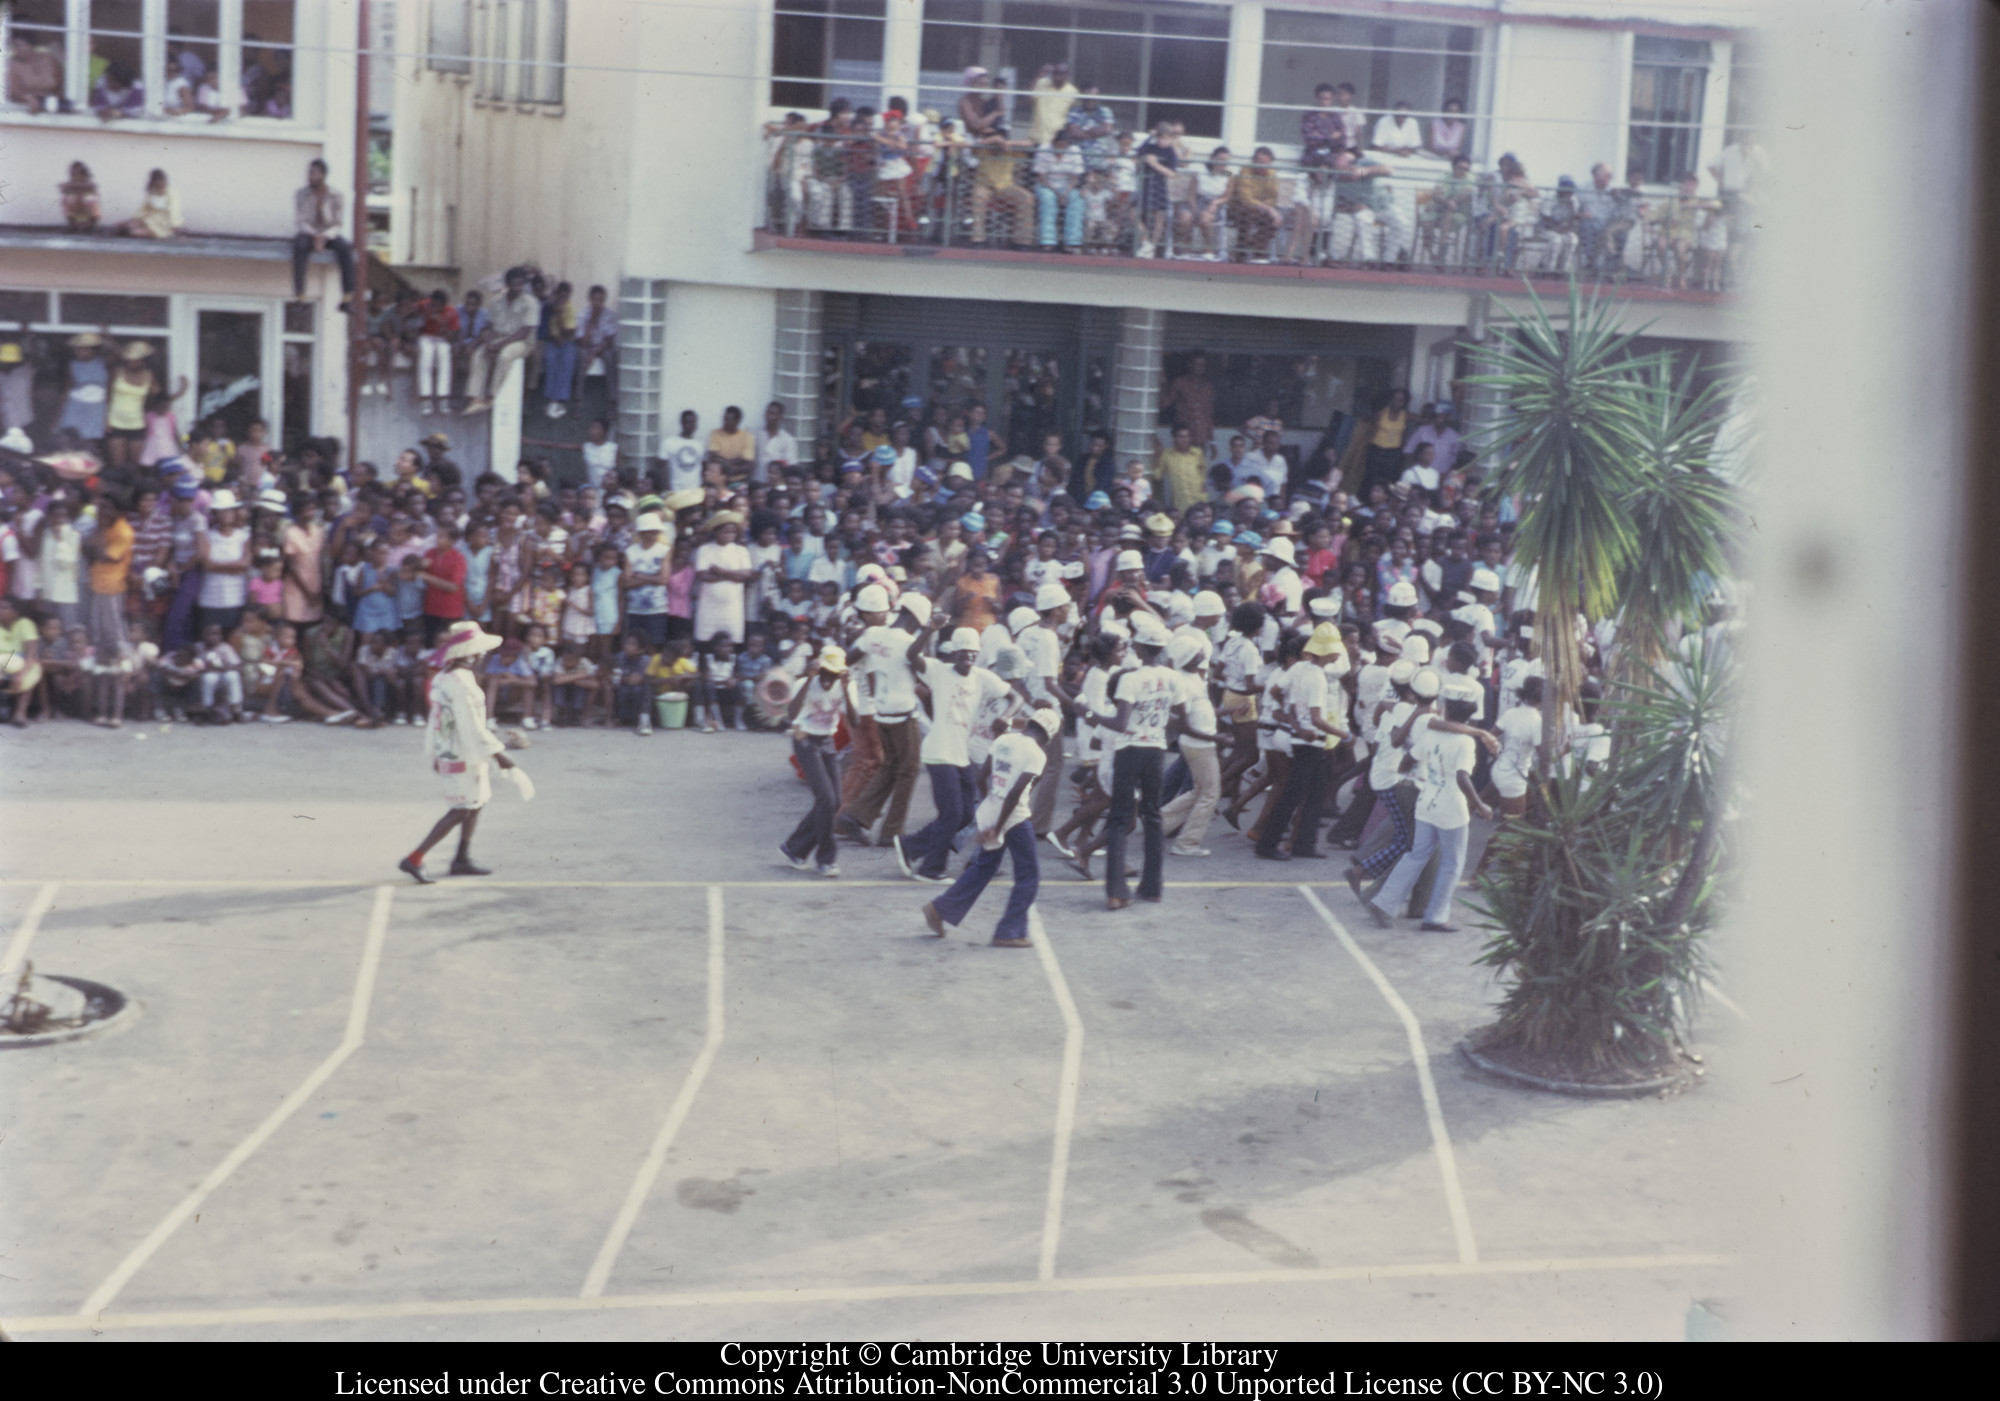 Castries Carnival, 1972-02